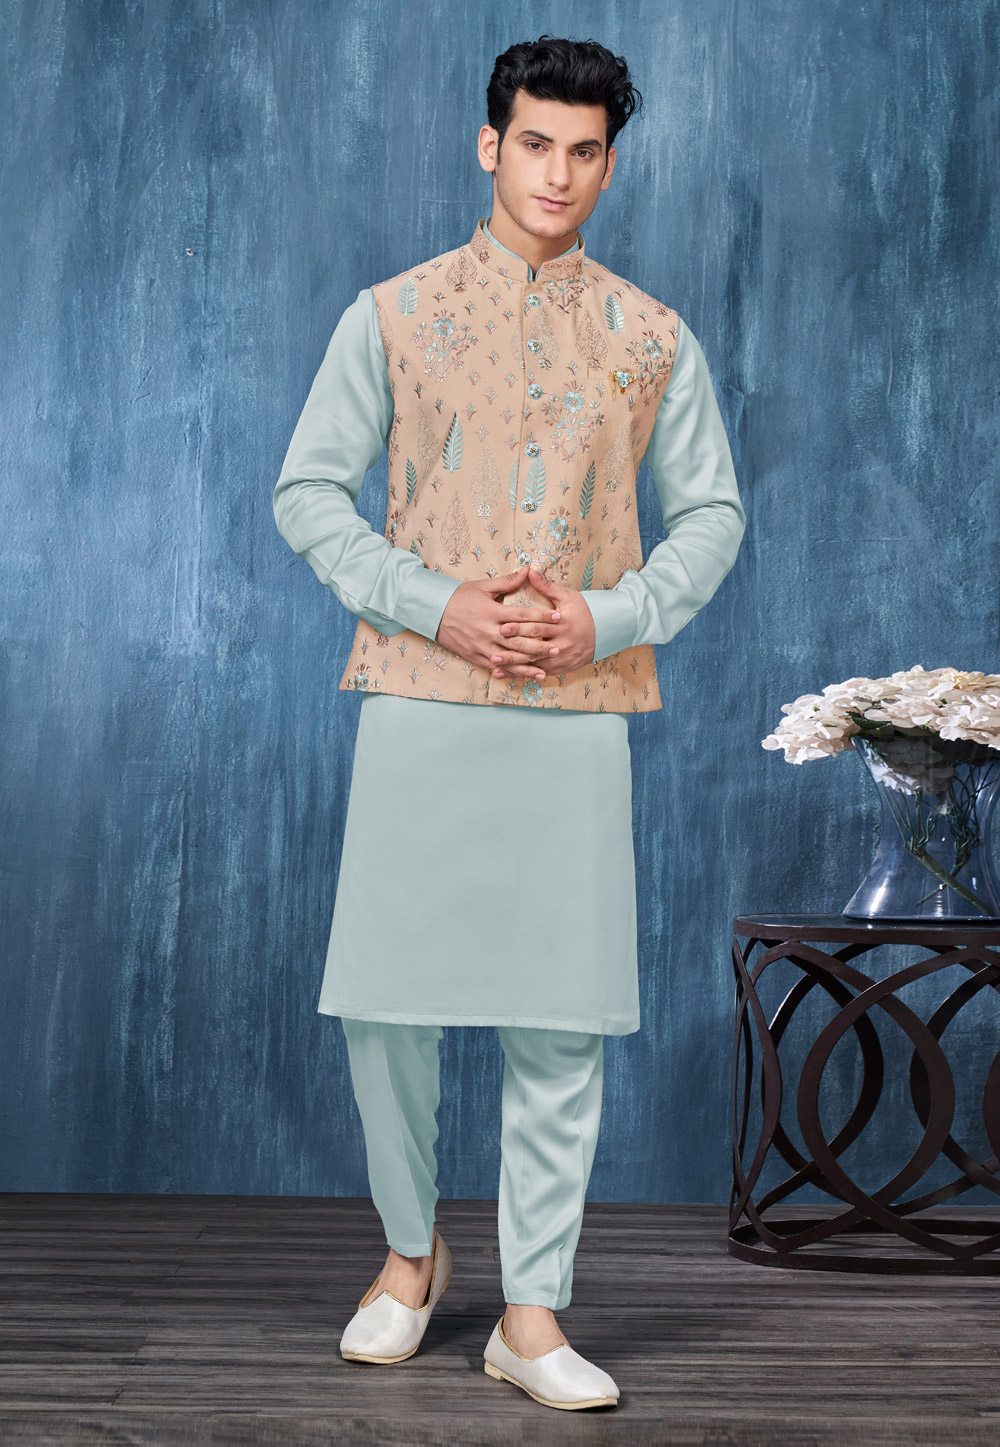 Sky Blue Banarasi Silk Jacket with Kurta And Pajama for men online India  Color Blue SizeKurta 42 Combination Options Kurta + Bottom + Jacket